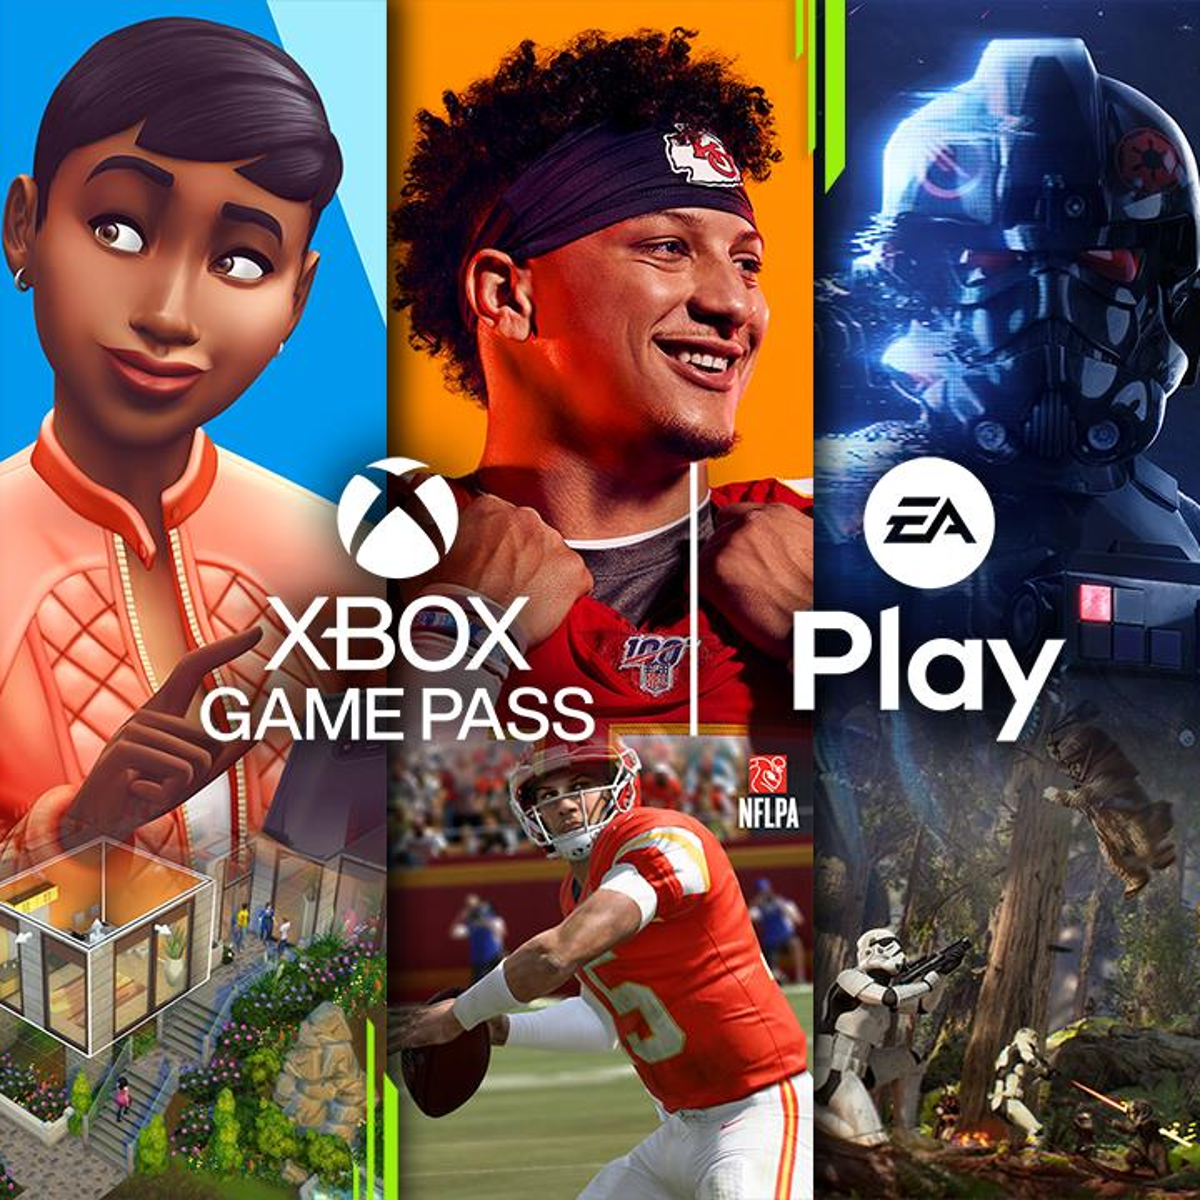 Xbox game турция. Xbox game Pass Ultimate 4 месяца. Иксбокс гейм пасс ультимейт. Подписка Xbox game Pass. Xbox Ultimate Pass 1 месяц.